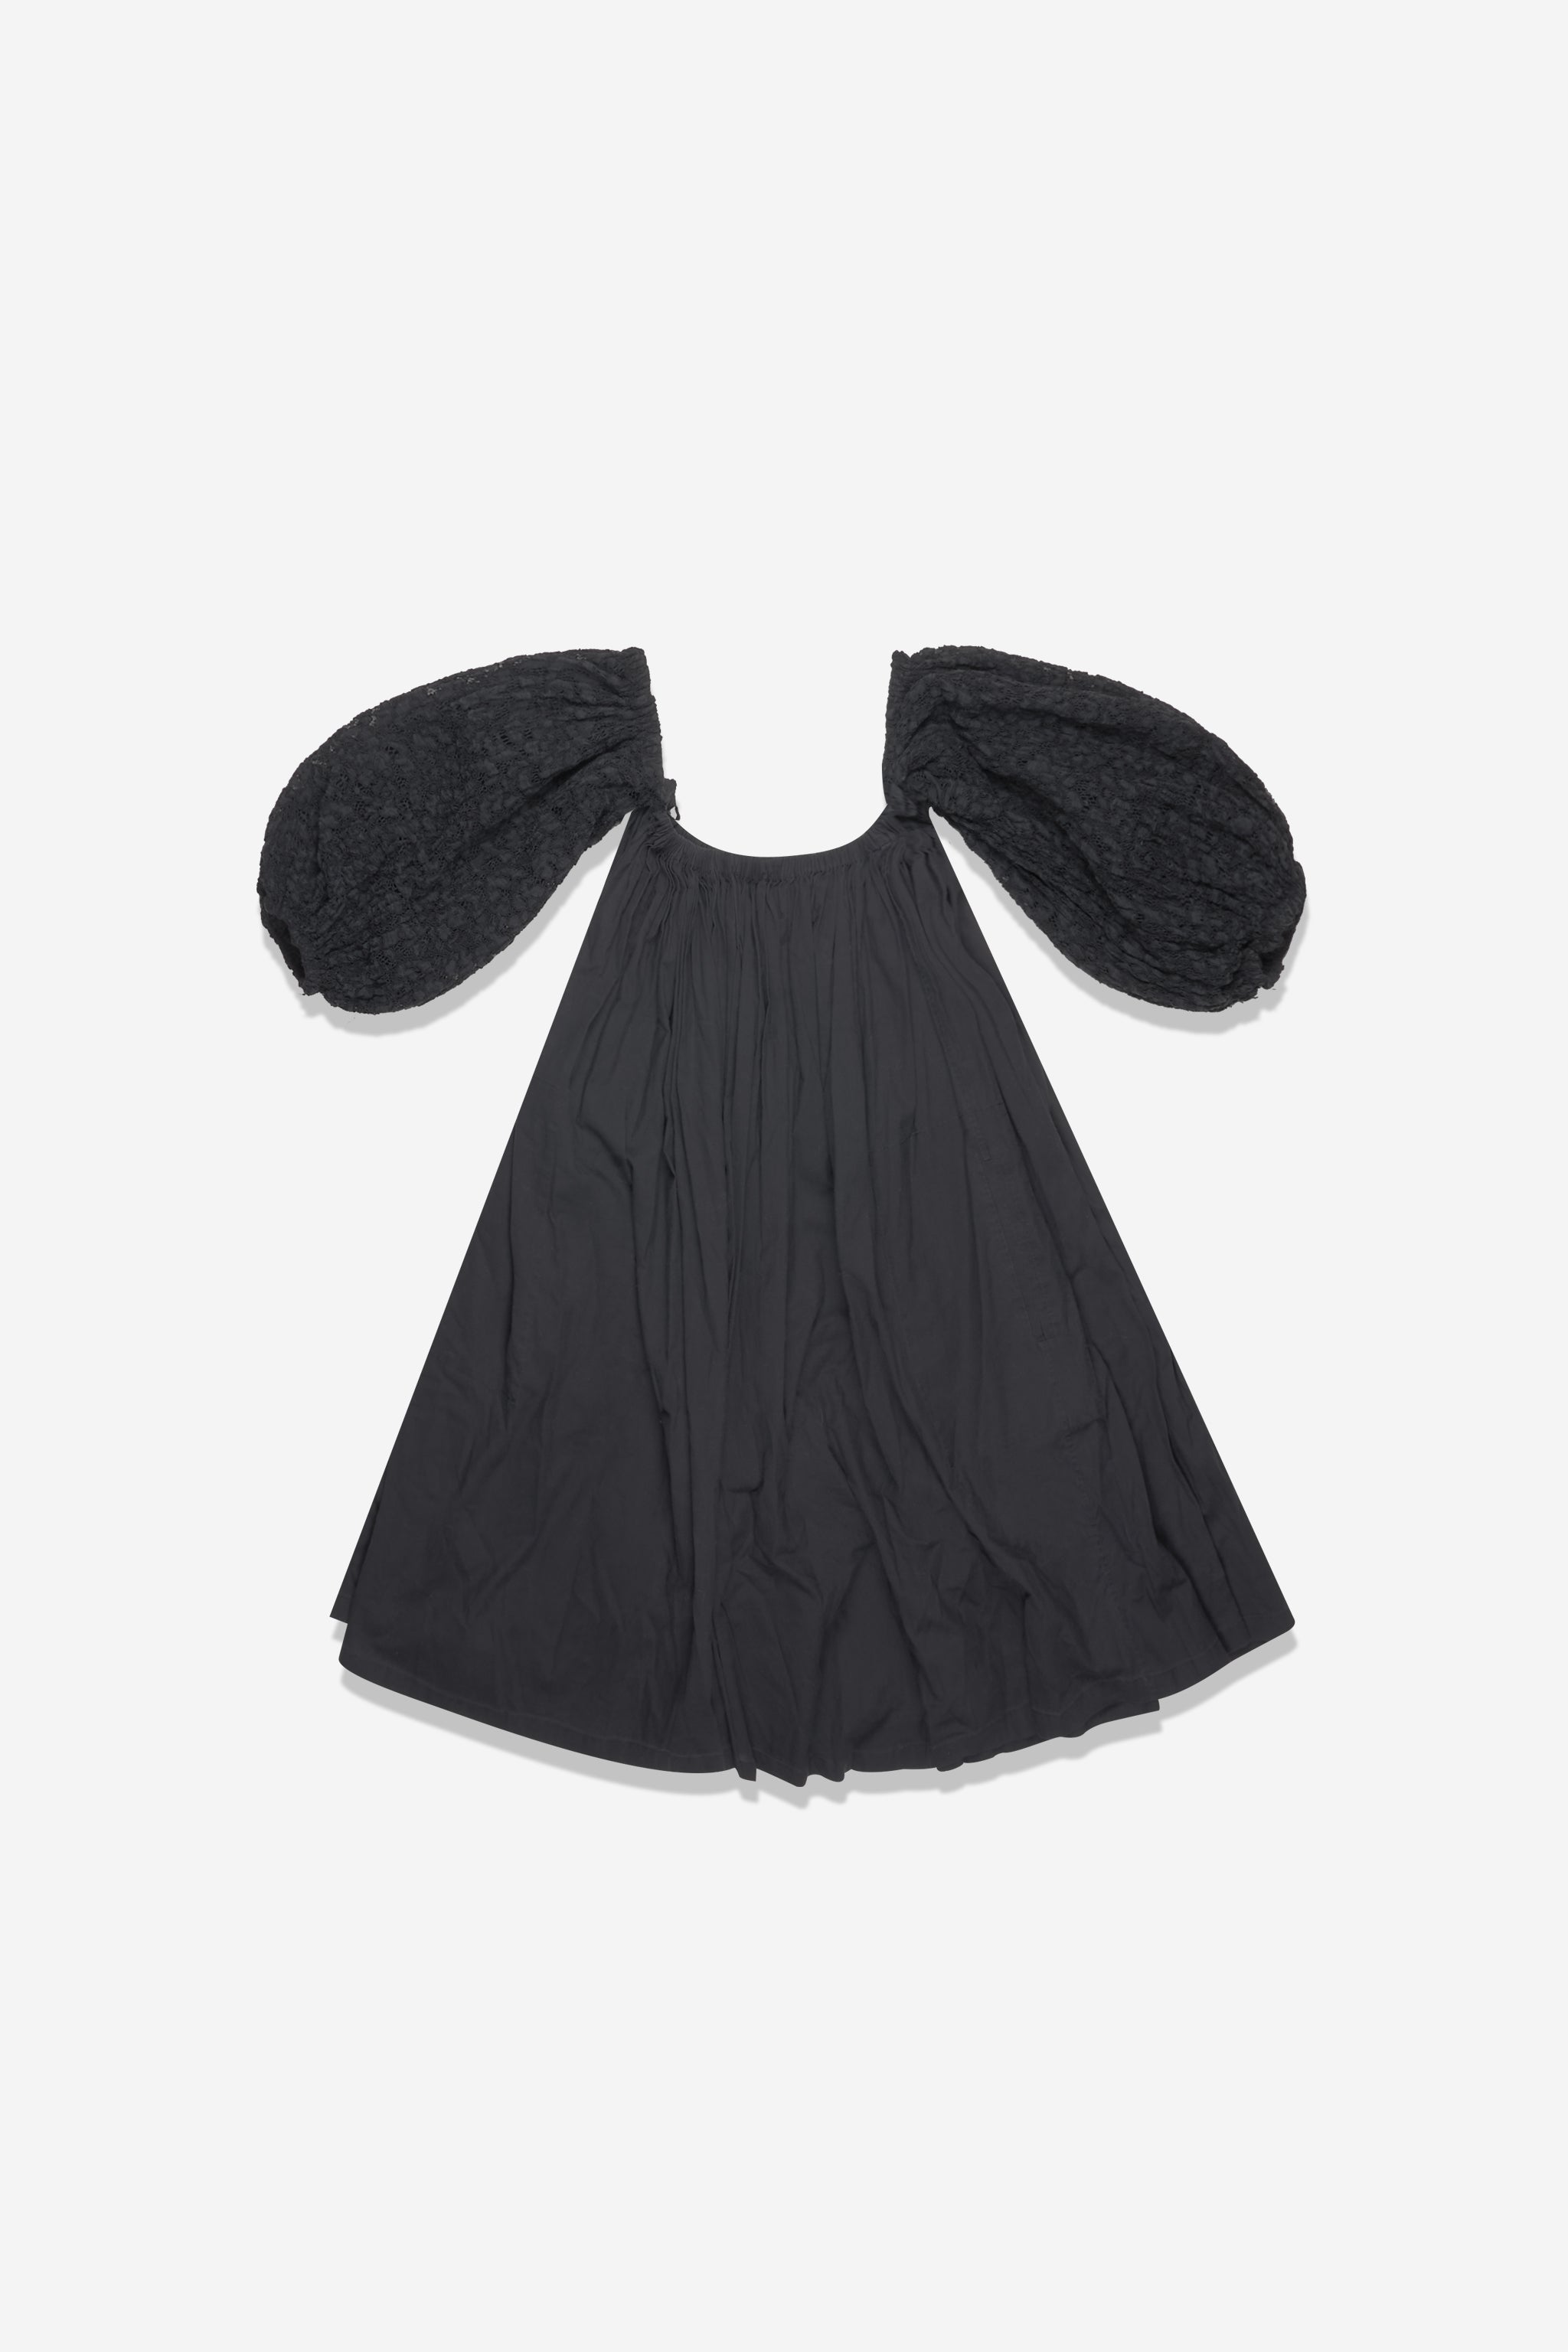 YSL black puff sleeve dress